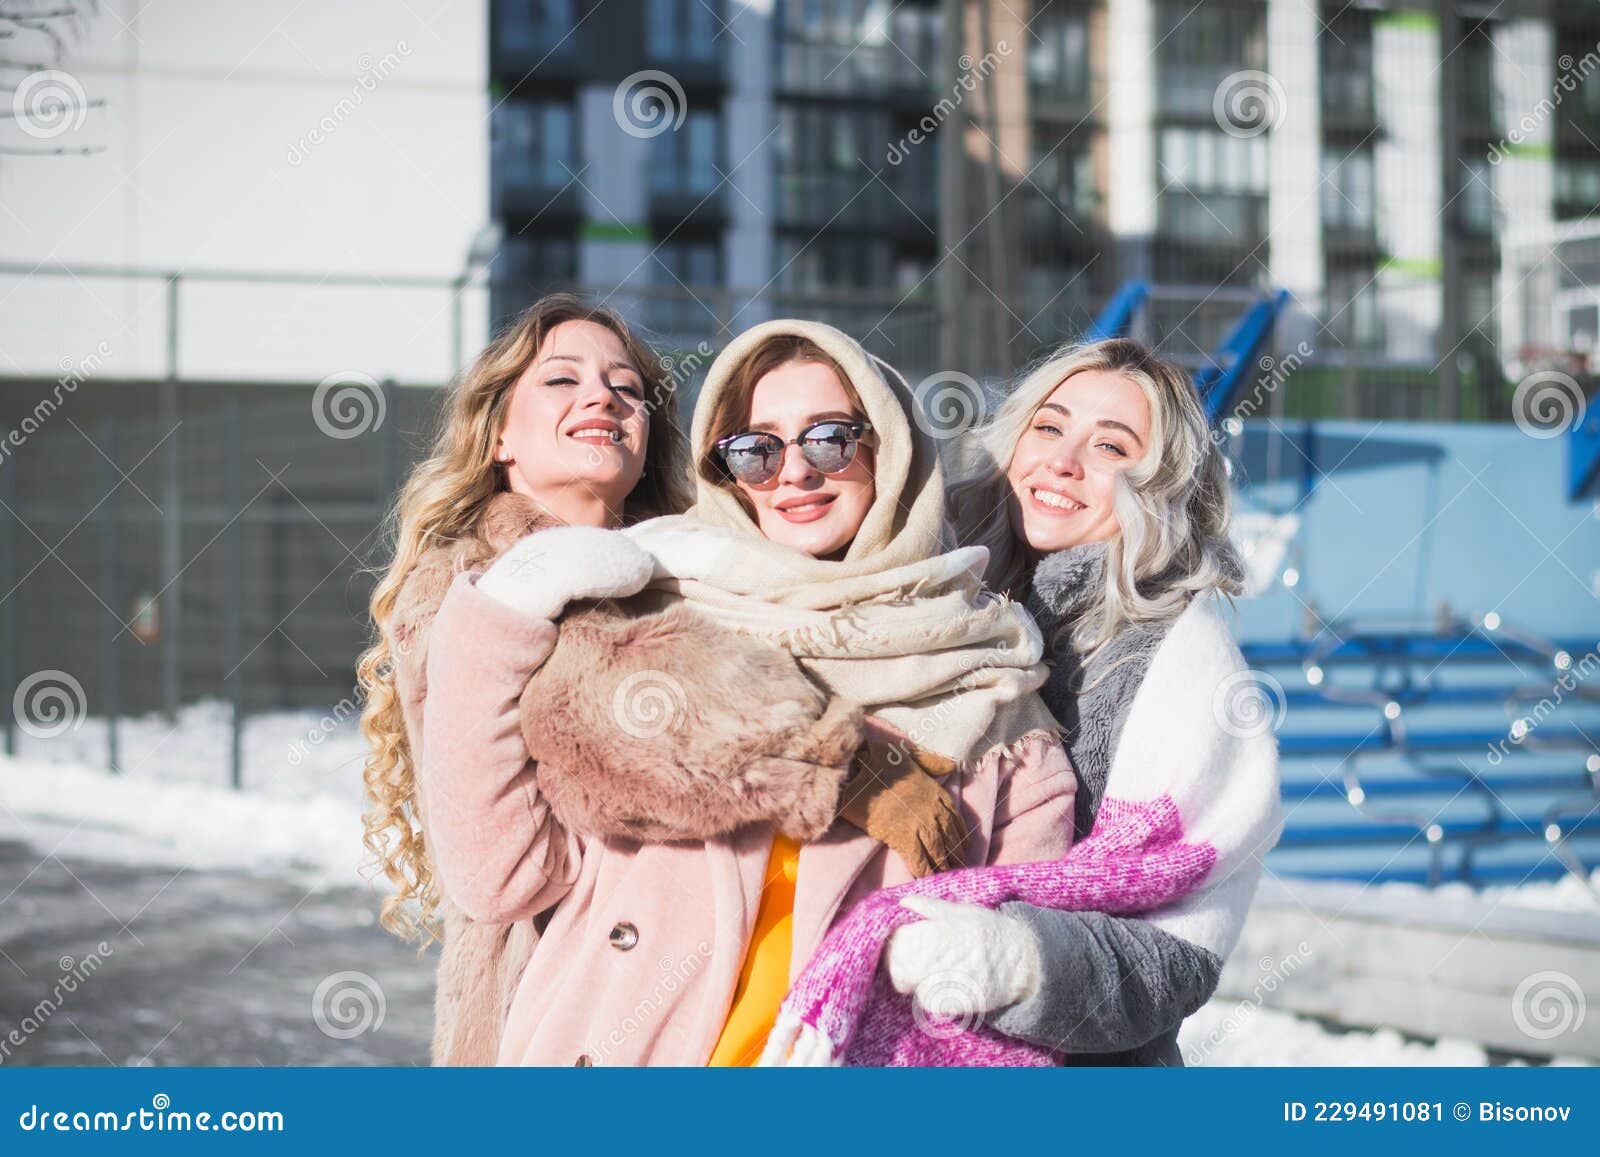 Three Beautiful Russian Girls Are Having Fun On The Street Stock Image Image Of Embracing